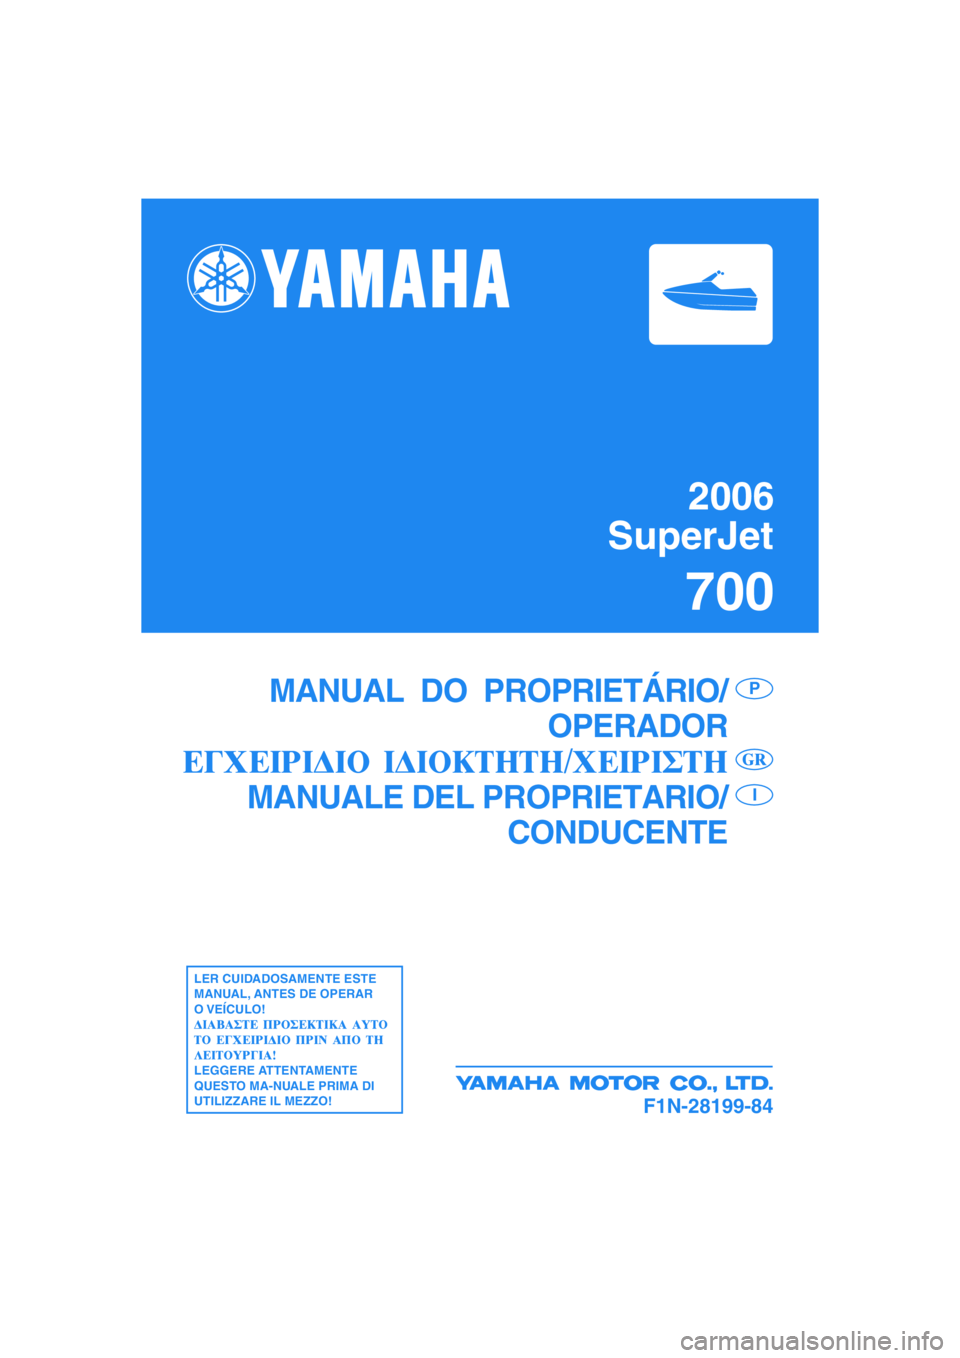 YAMAHA SUPERJET 2006  Manual de utilização (in Portuguese) 2006
SuperJet
700
F1N-28199-84
MANUAL  DO  PROPRIETÁRIO/
OPERADOR
MANUALE DEL PROPRIETARIO/
CONDUCENTEP
I
LER CUIDADOSAMENTE ESTE
MANUAL, ANTES DE OPERAR
O VEÍCULO!
LEGGERE ATTENTAMENTE
QUESTO MA-NU